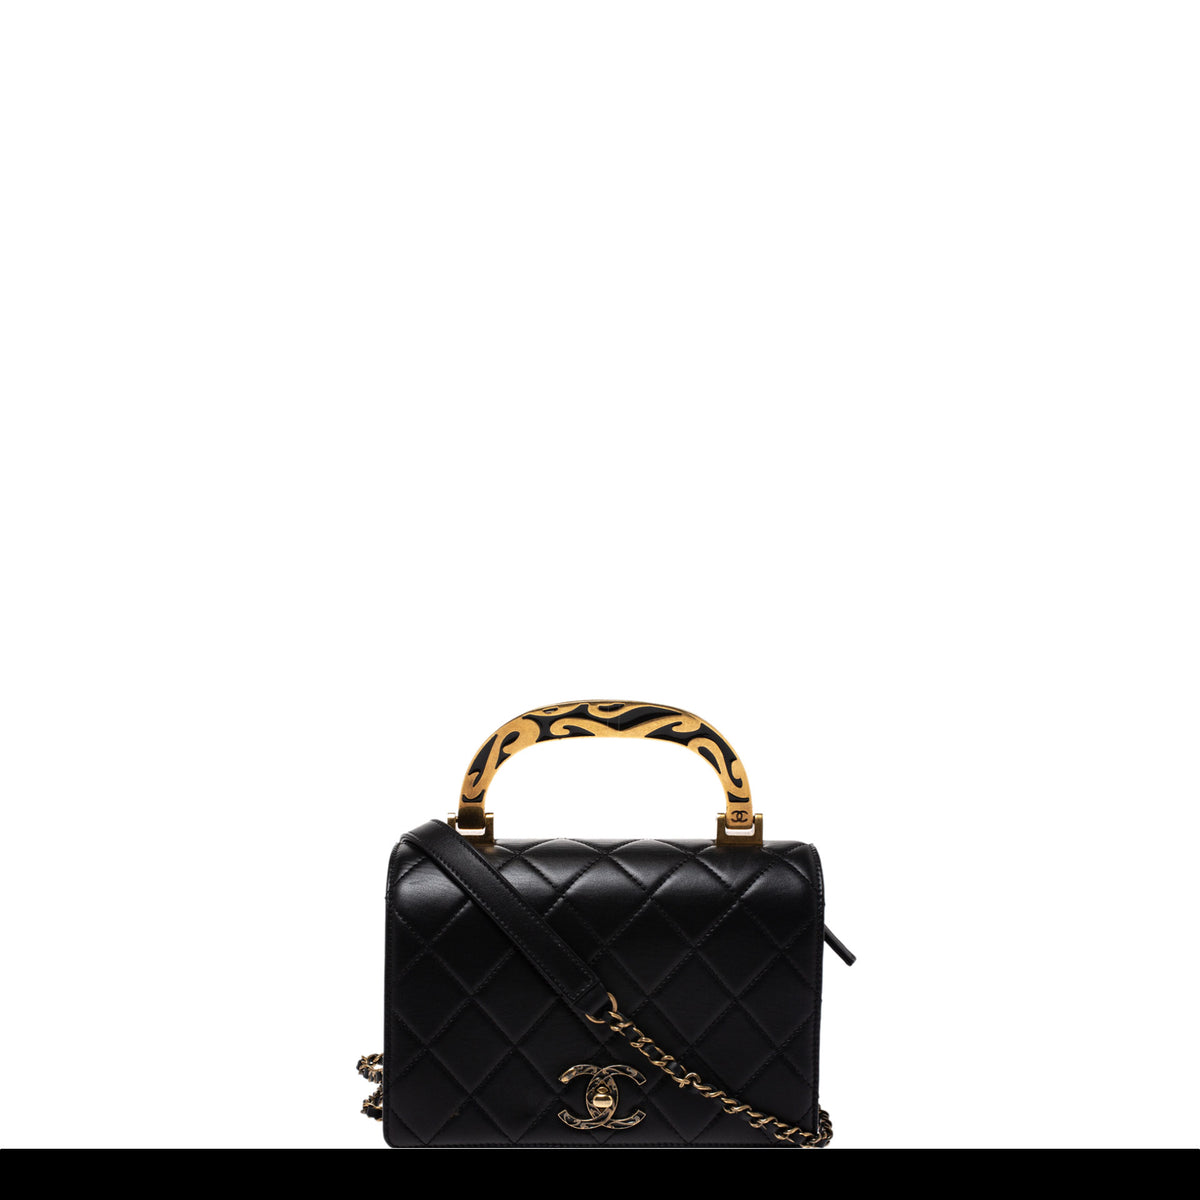 31 vintage patent leather handbag Chanel Black in Patent leather